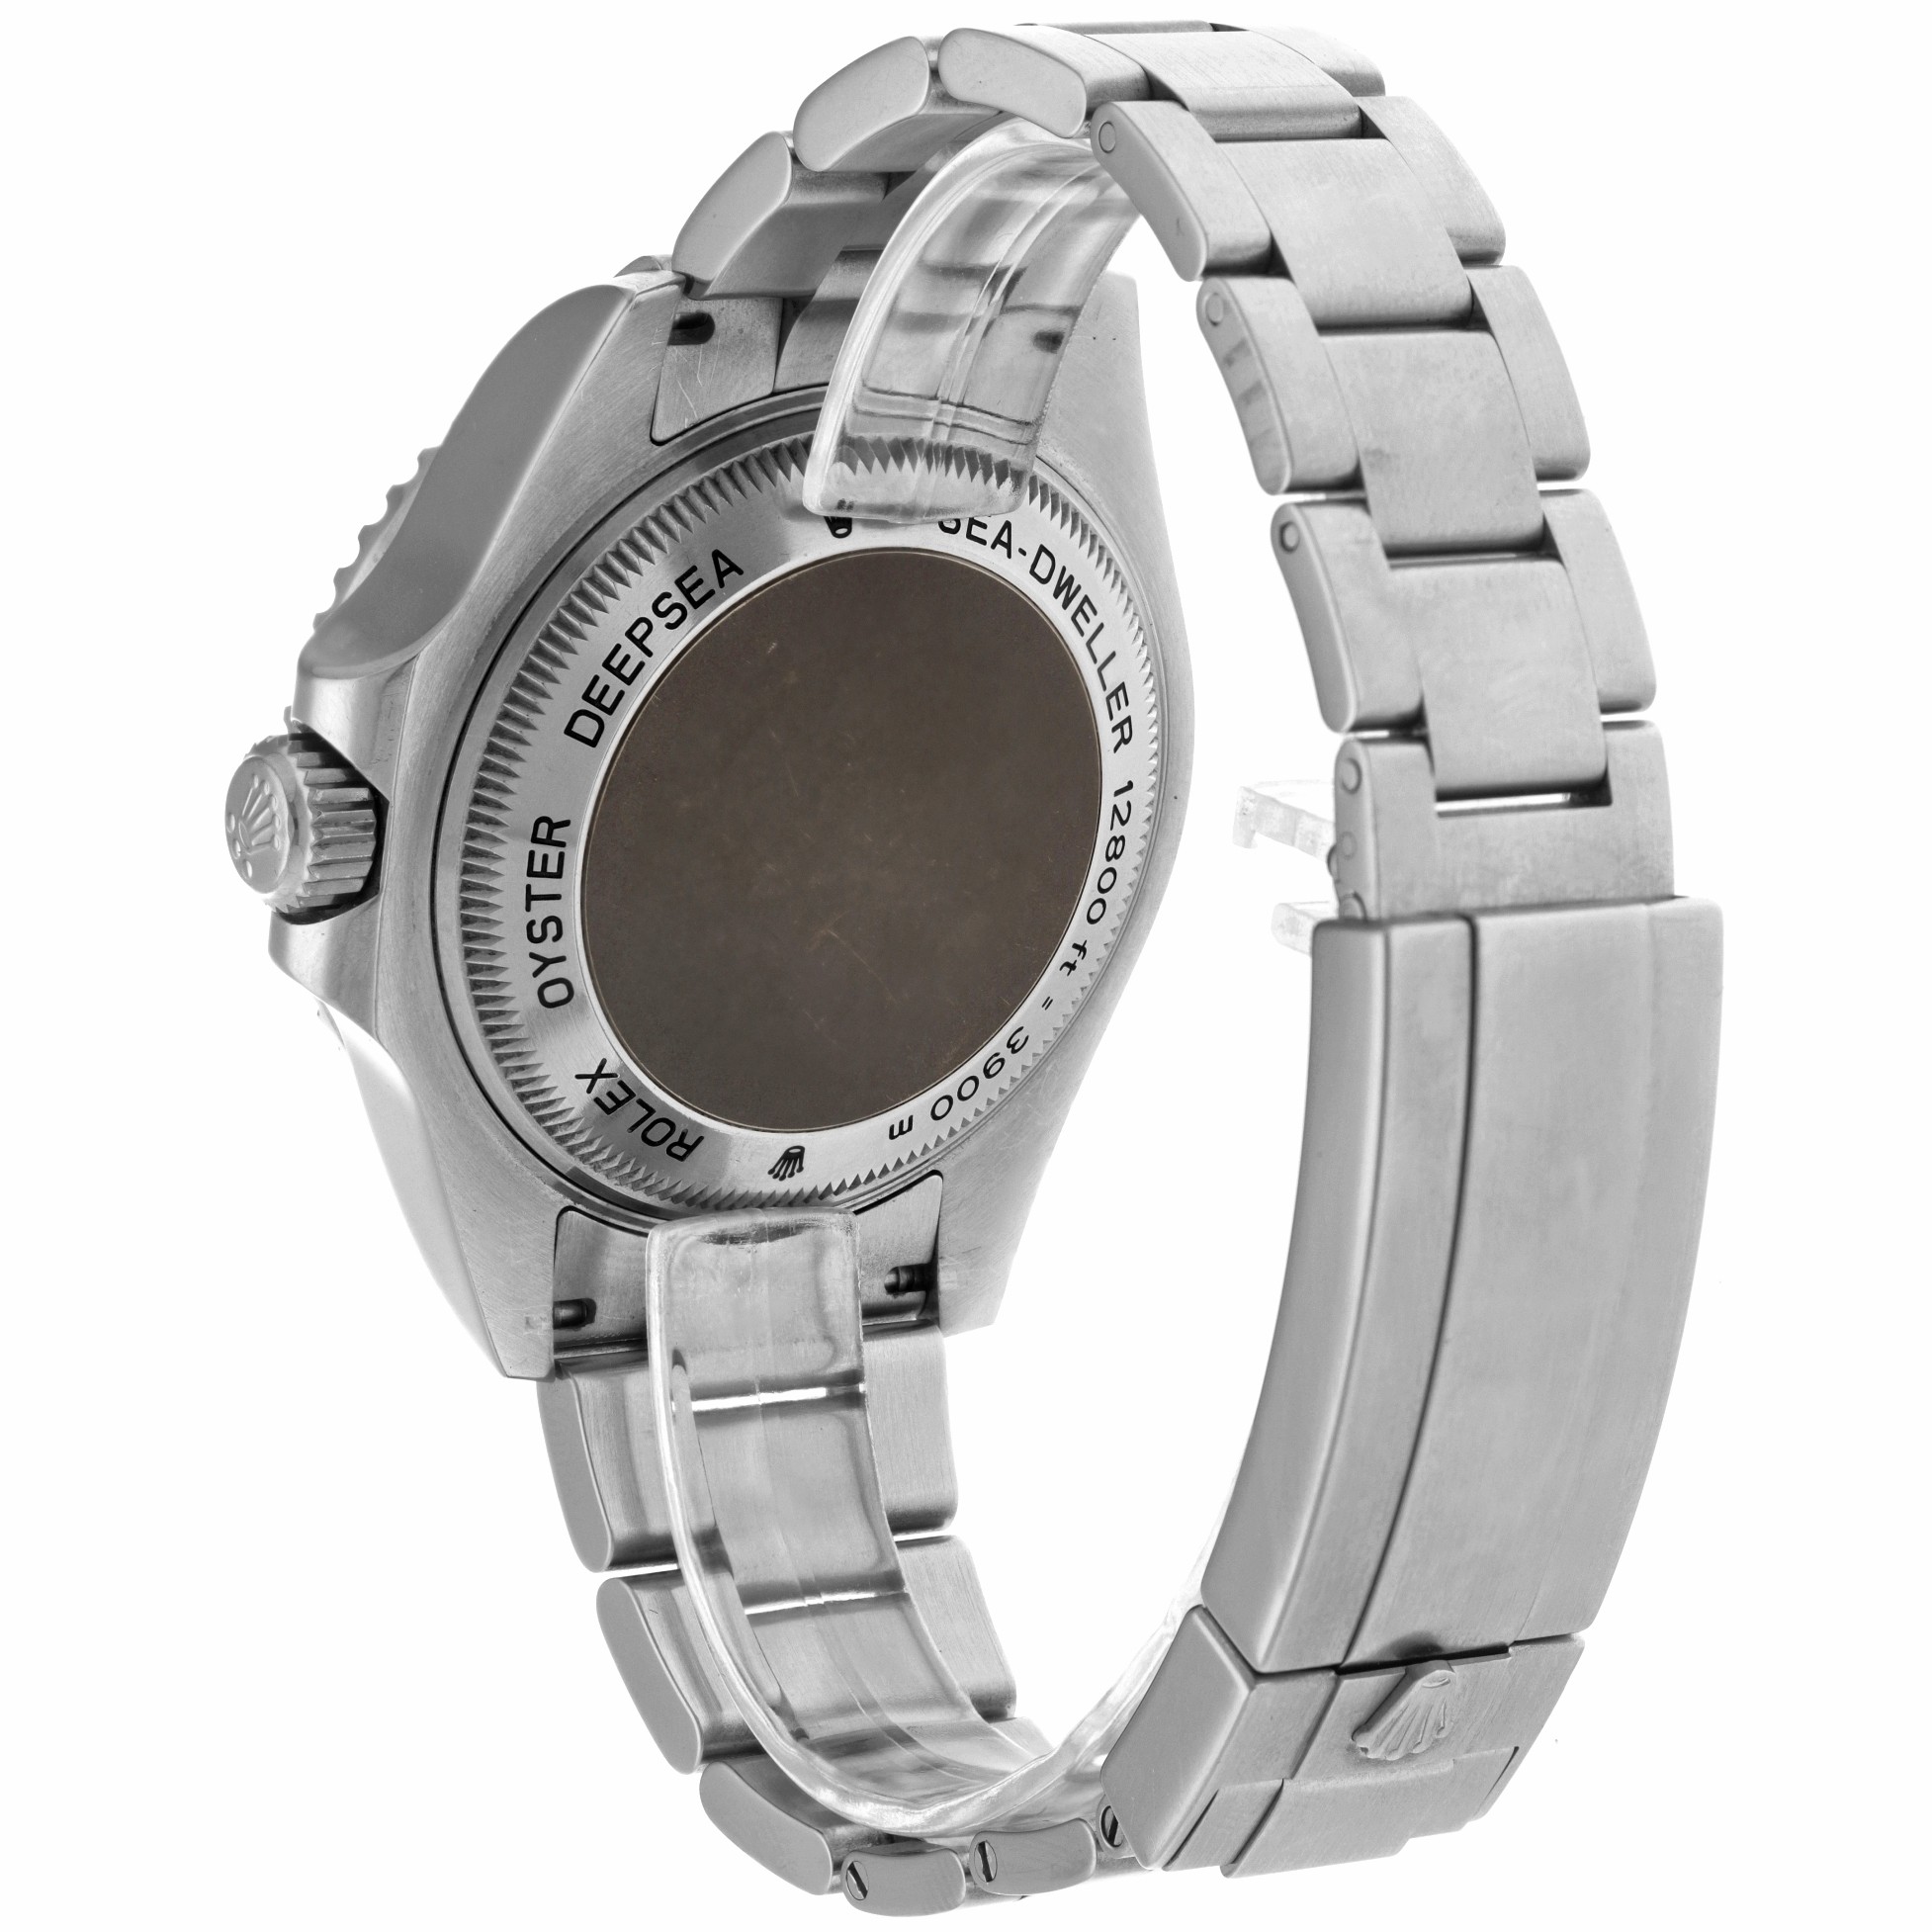 No Reserve - Rolex Sea-Dweller Deepsea 116660 - Men's watch - approx. 1991. - Image 3 of 6